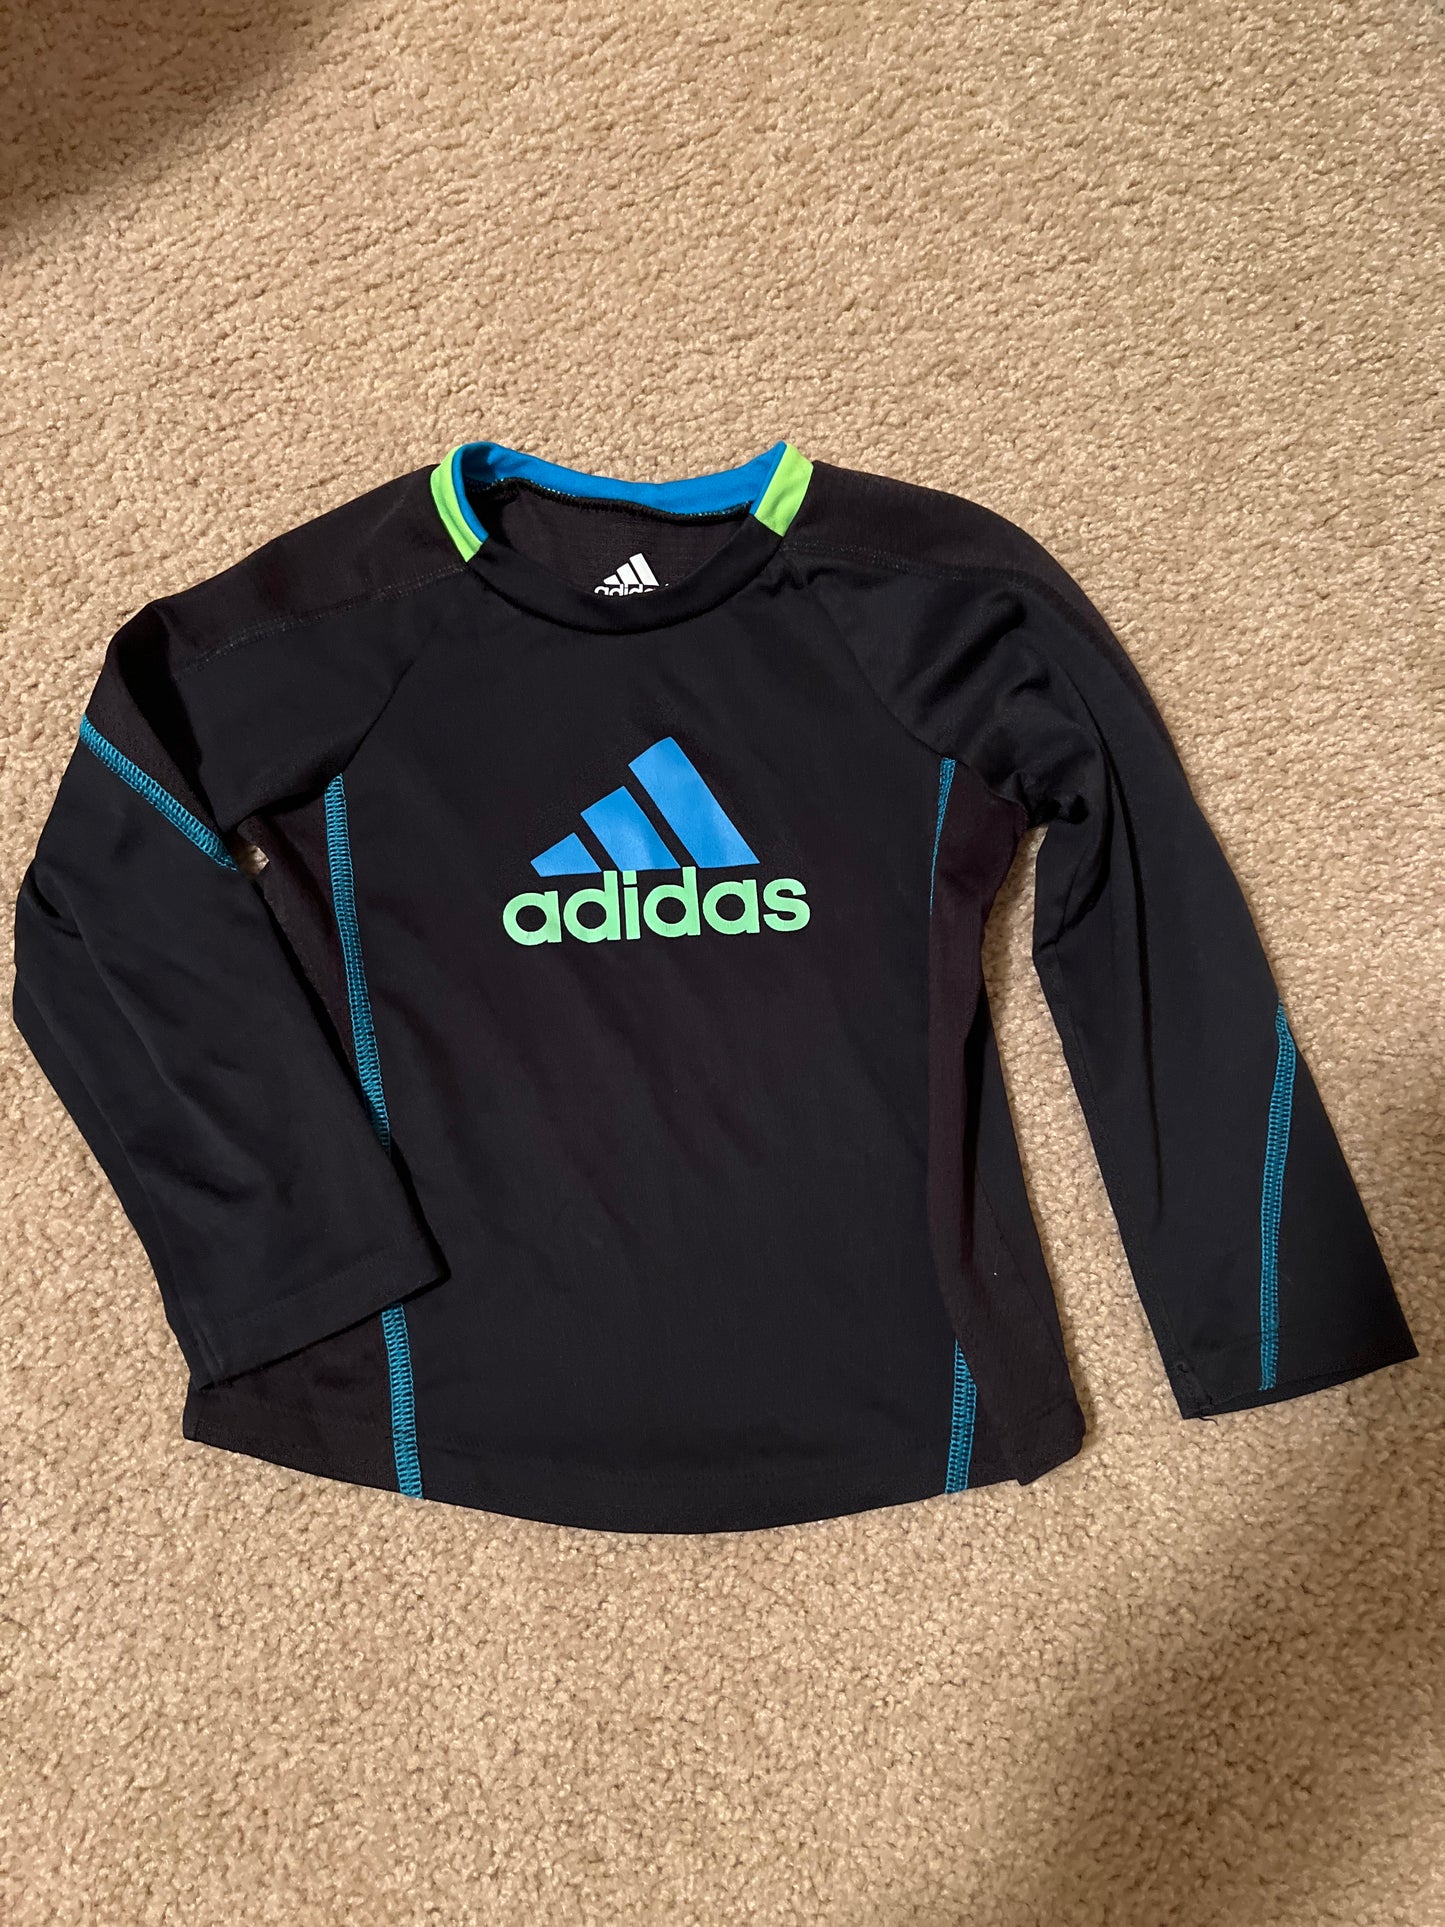 Boys Adidas long sleeve shirt, 2T PPU 41076